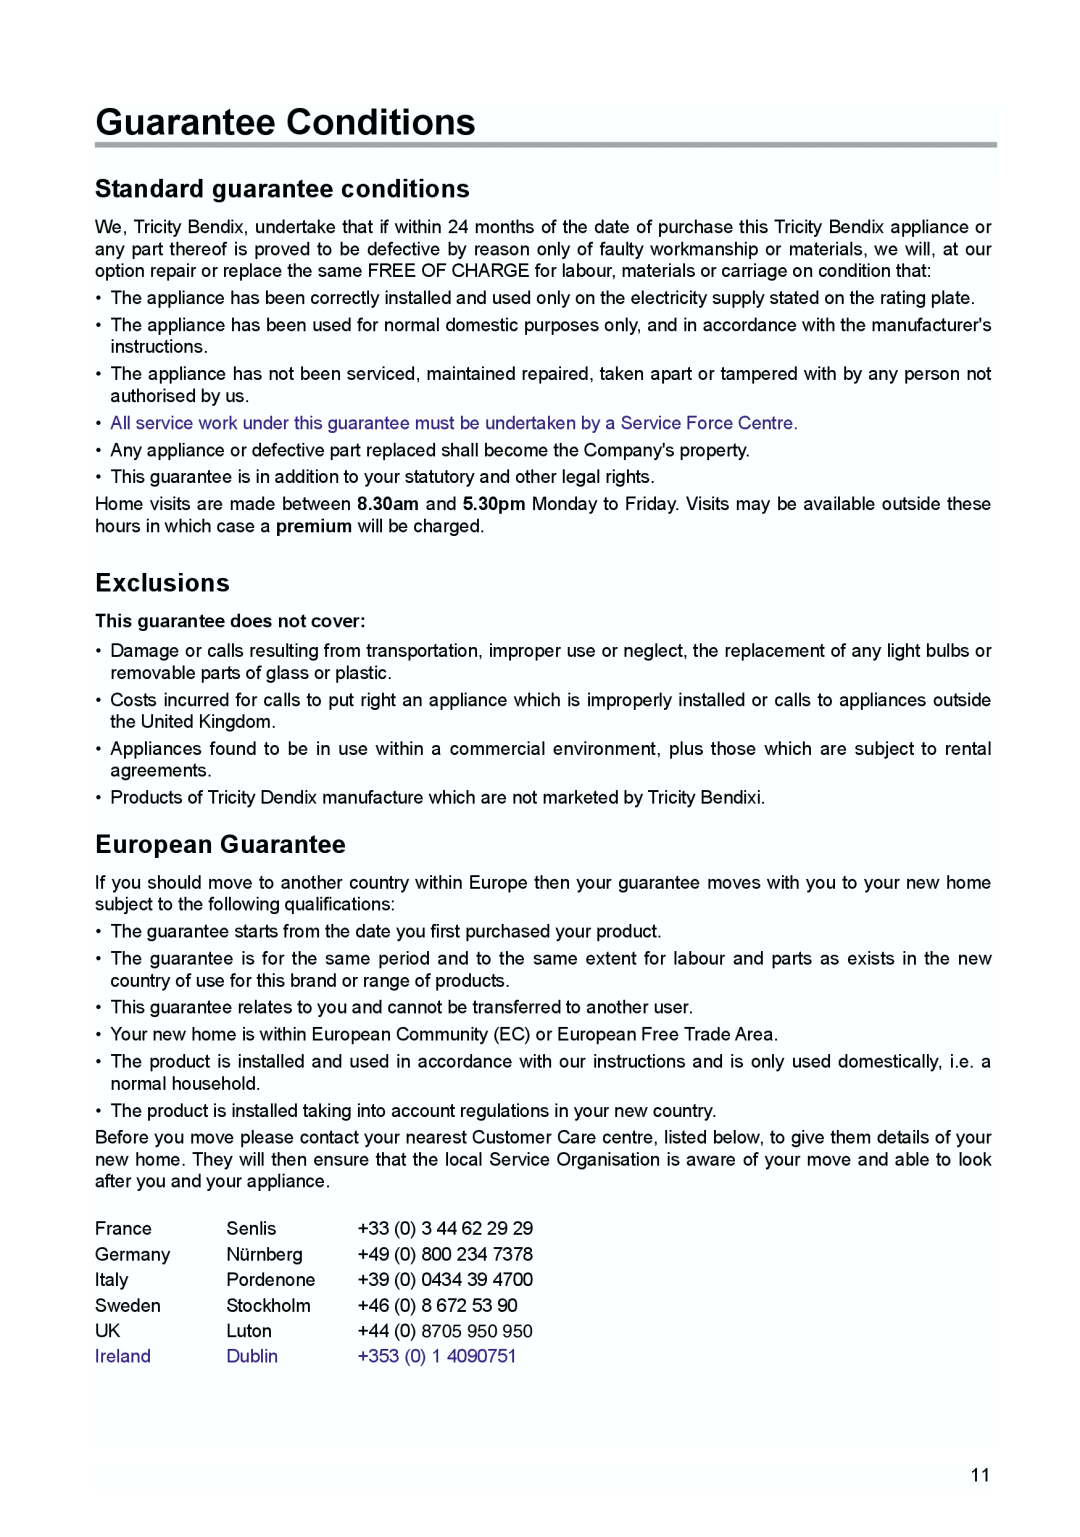 Tricity Bendix TBUR 120 Guarantee Conditions, Standard guarantee conditions, Exclusions, European Guarantee, 8705, Ireland 